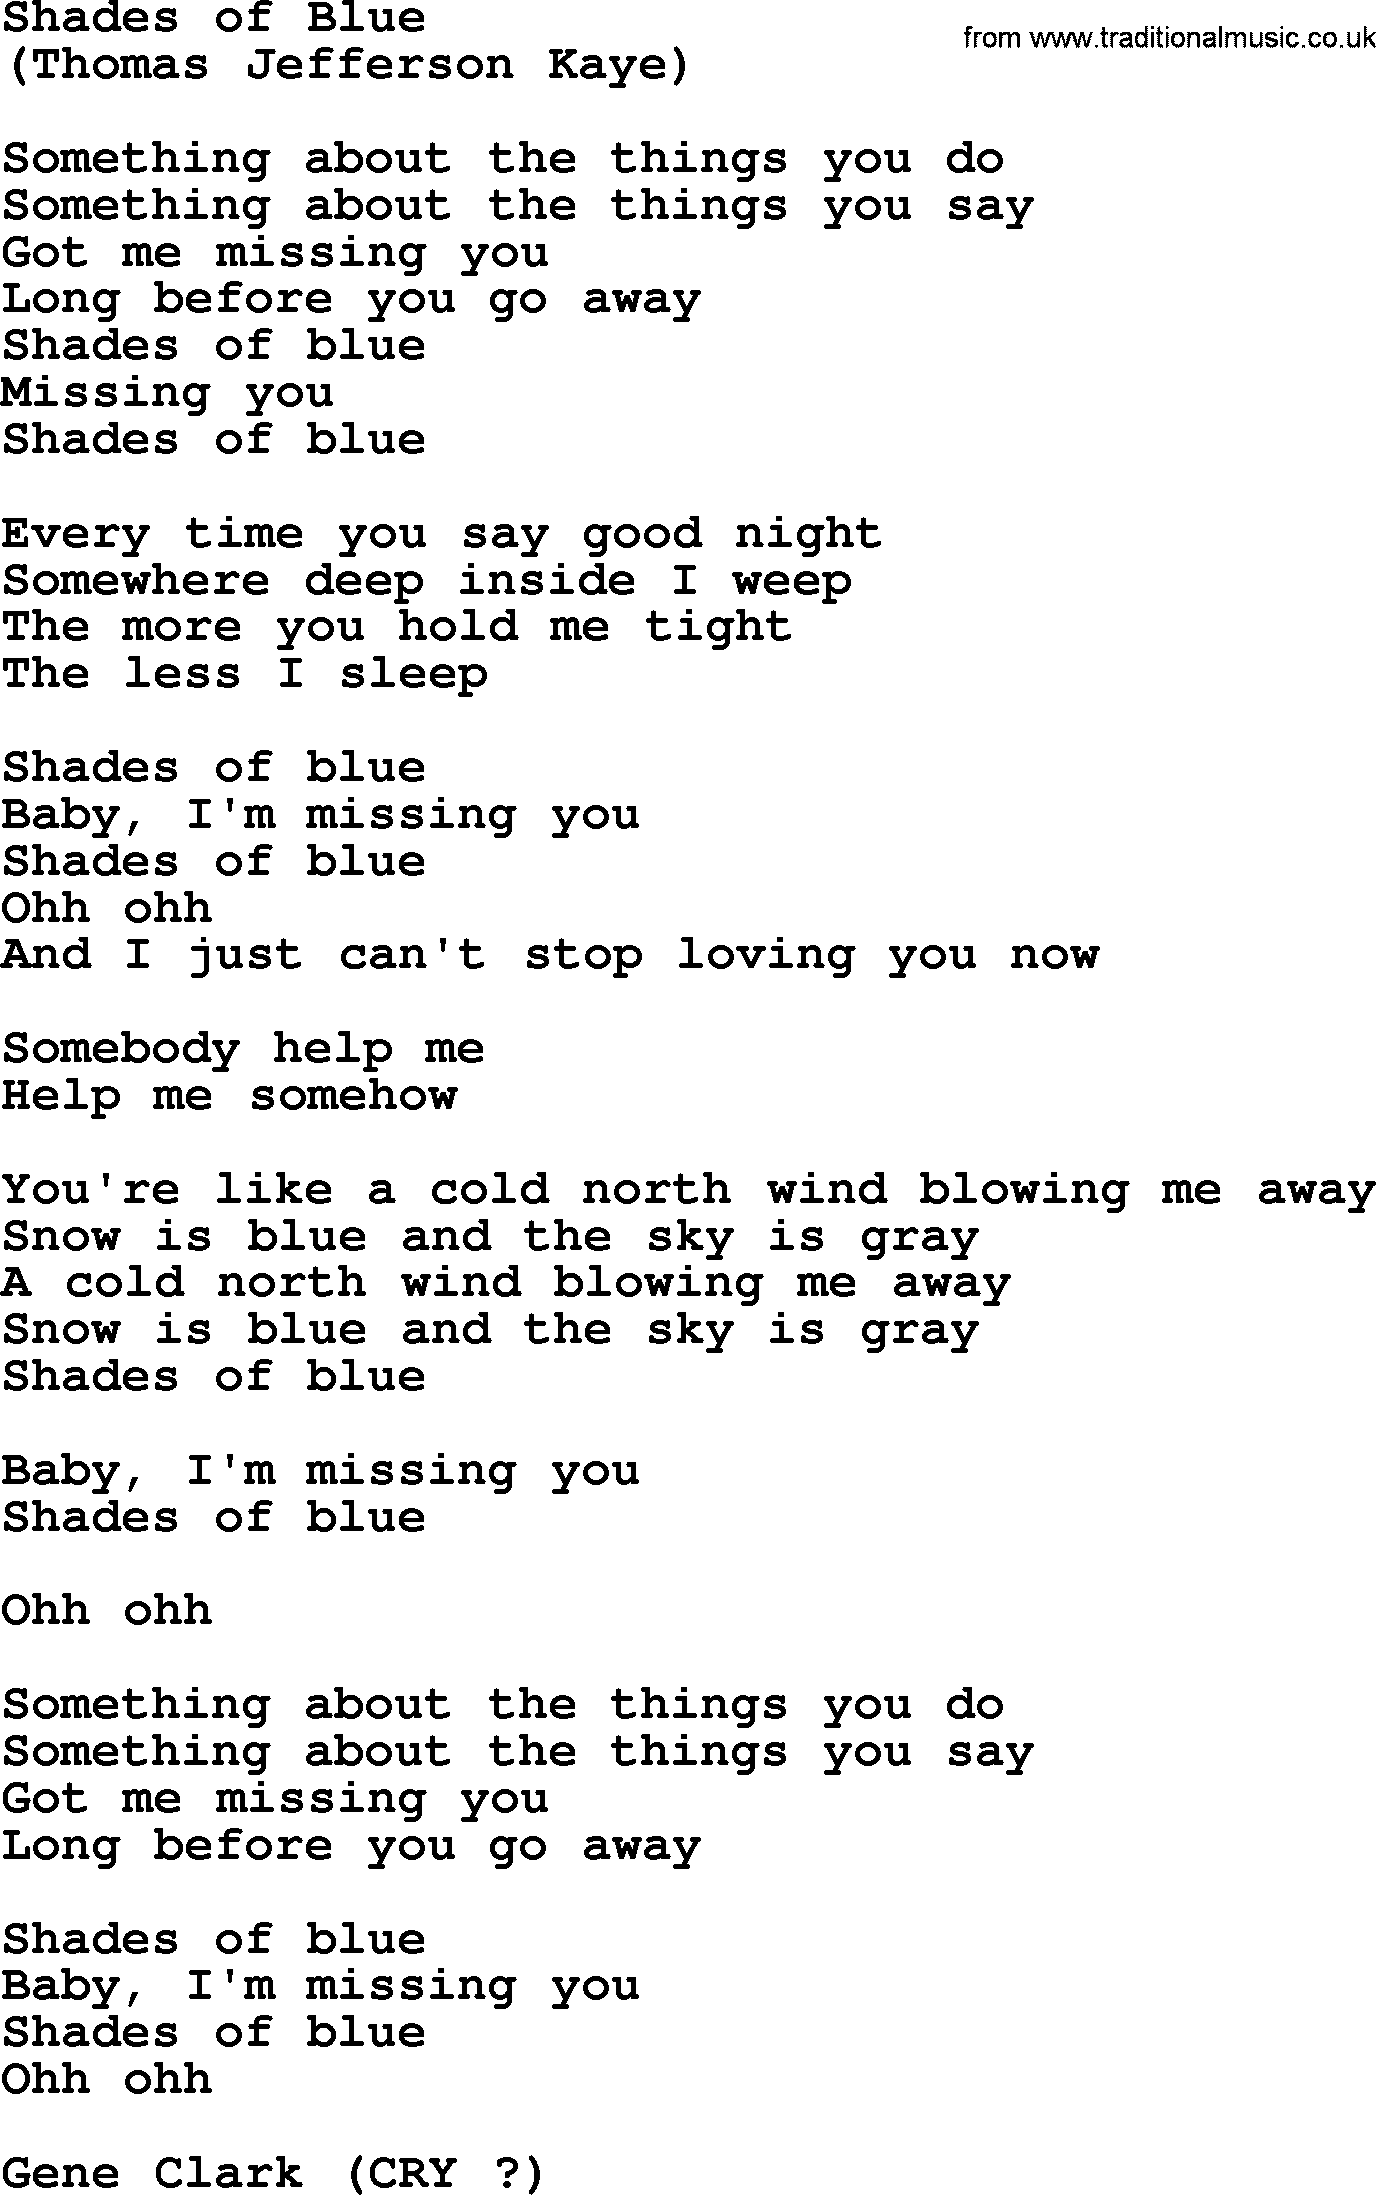 The Byrds song Shades Of Blue, lyrics